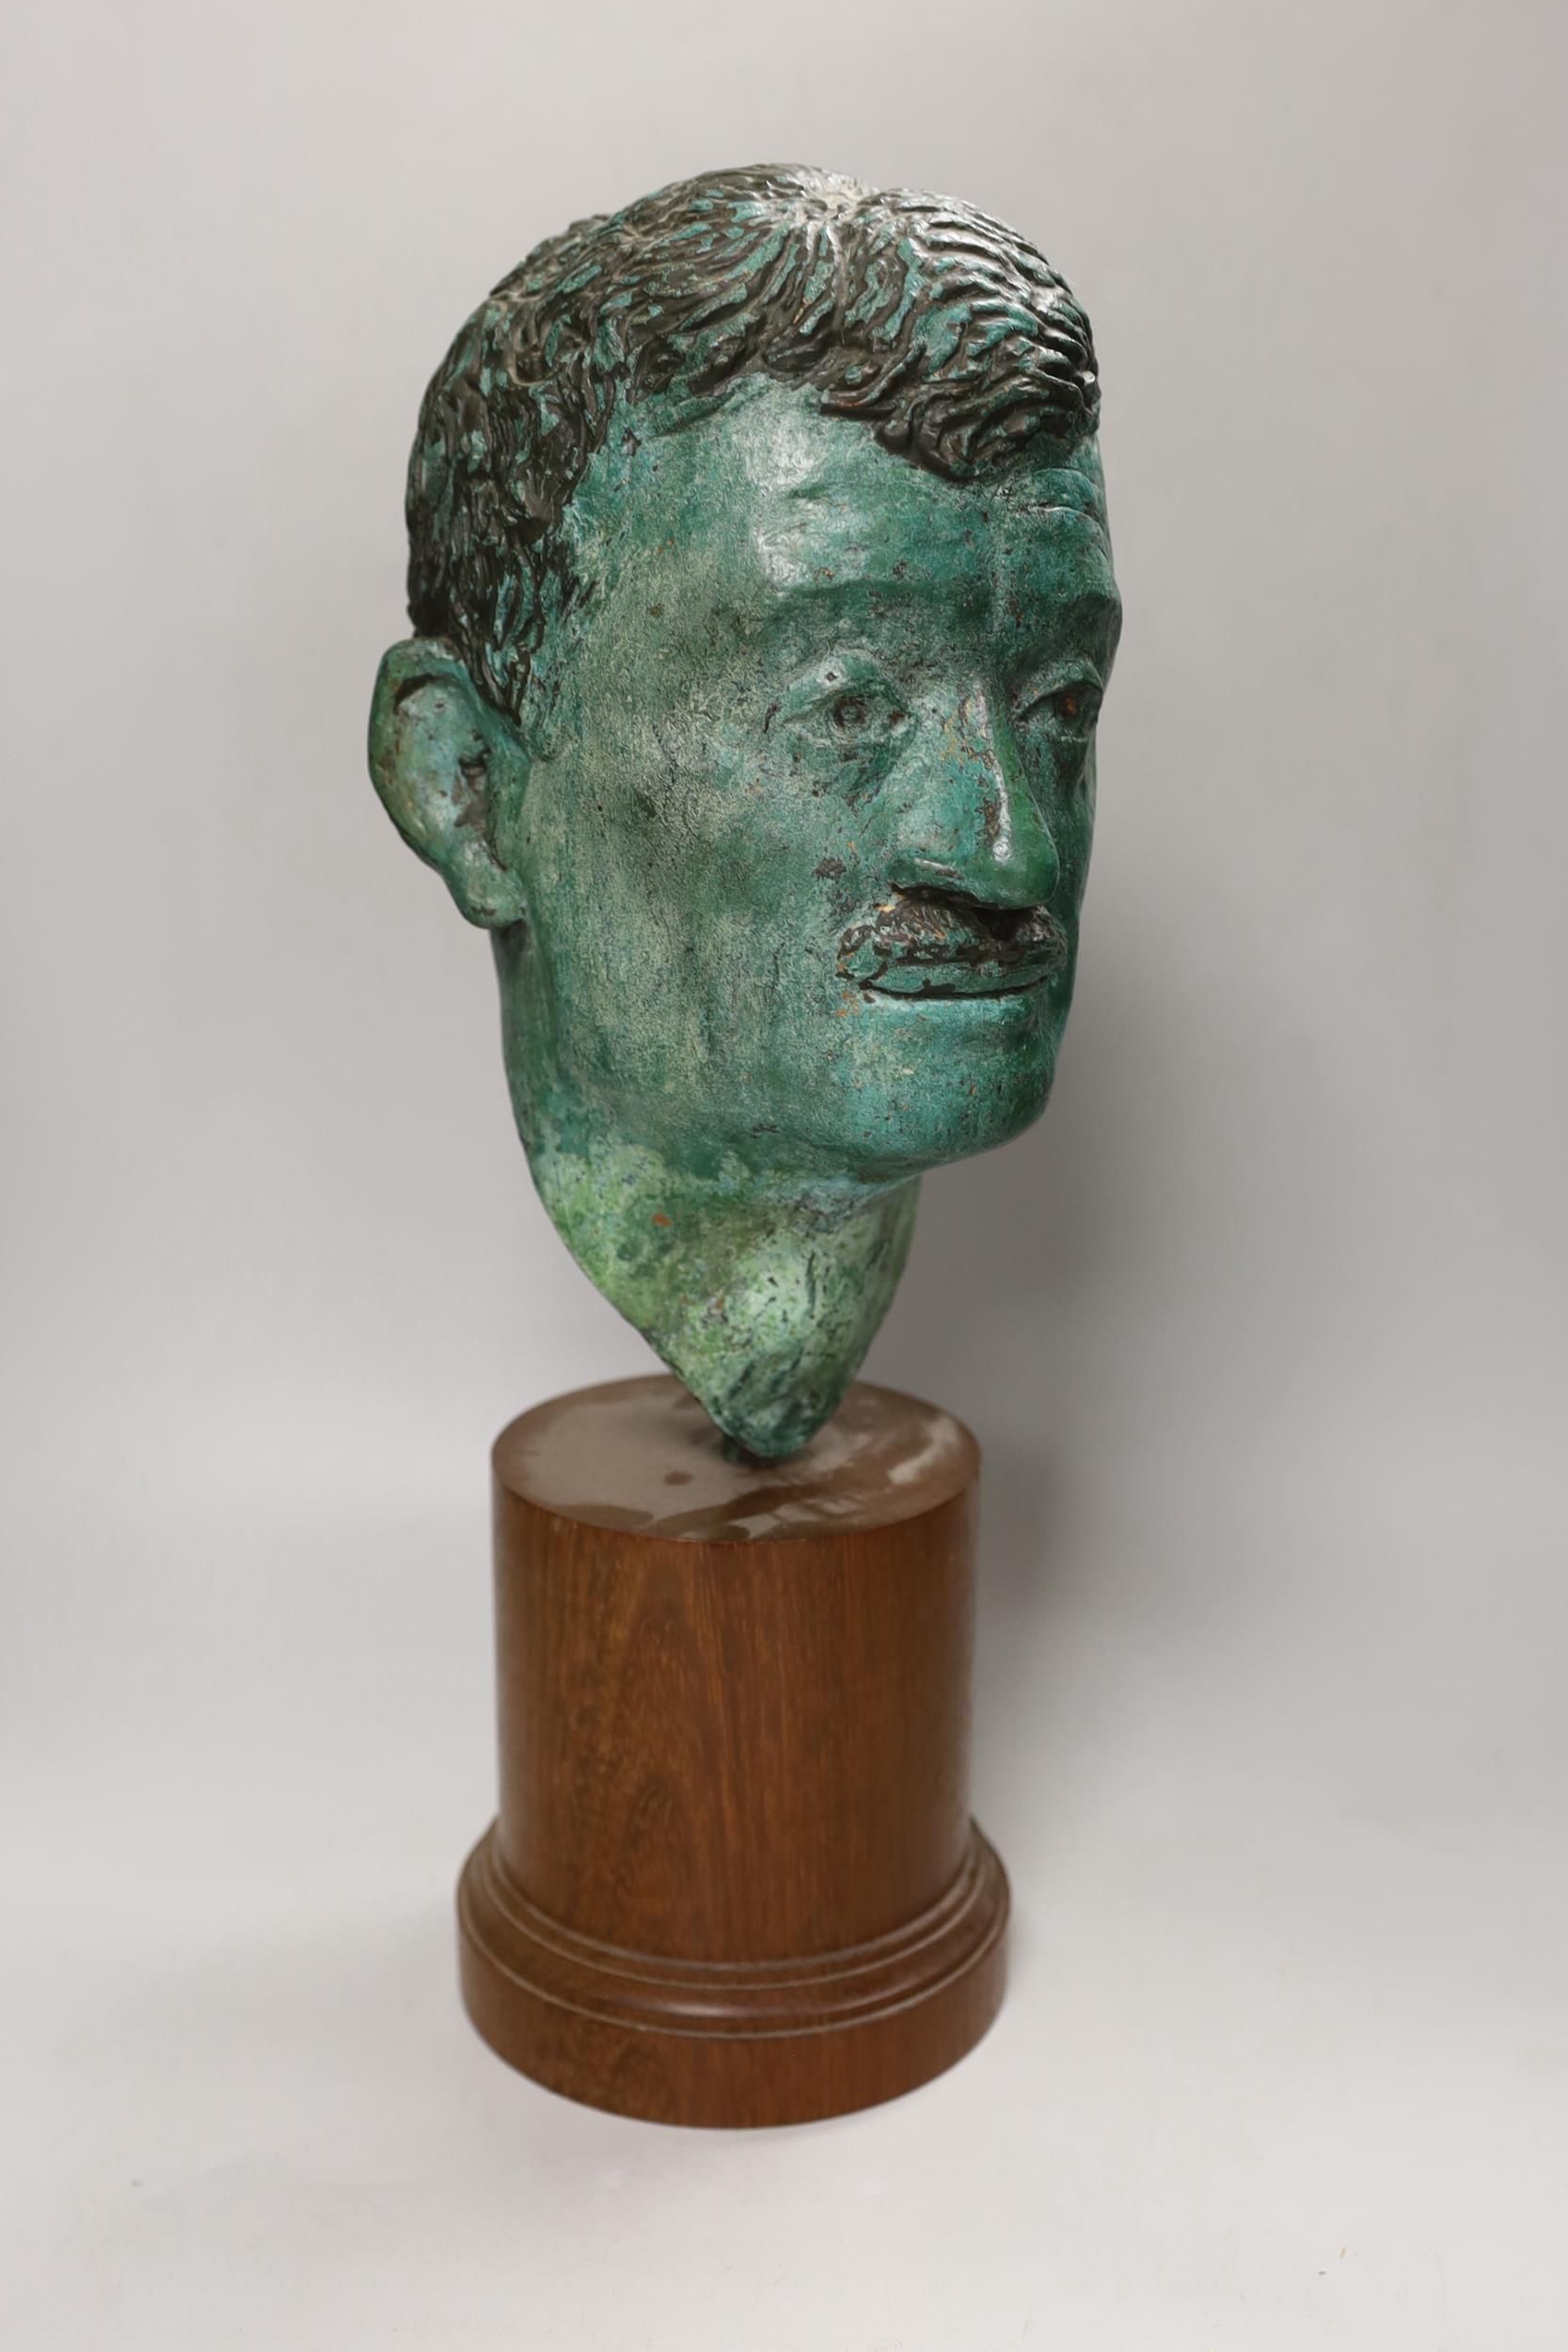 A verdigris metal head of a gentleman mounted on a wooden stand, 48cm high